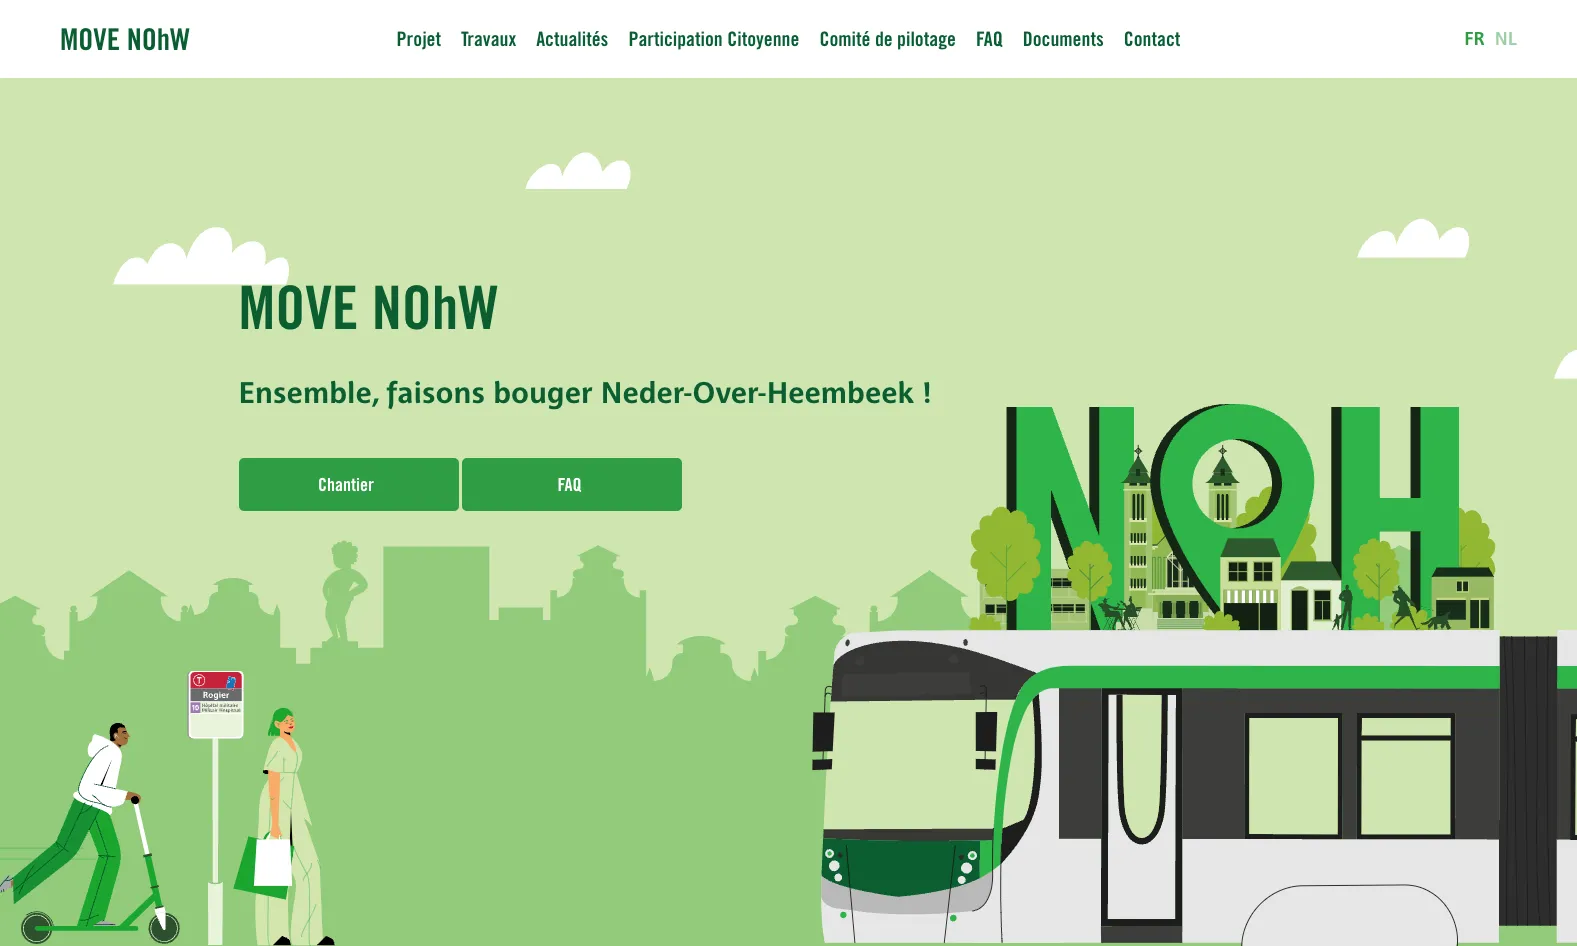 Move NOhW website screenshot